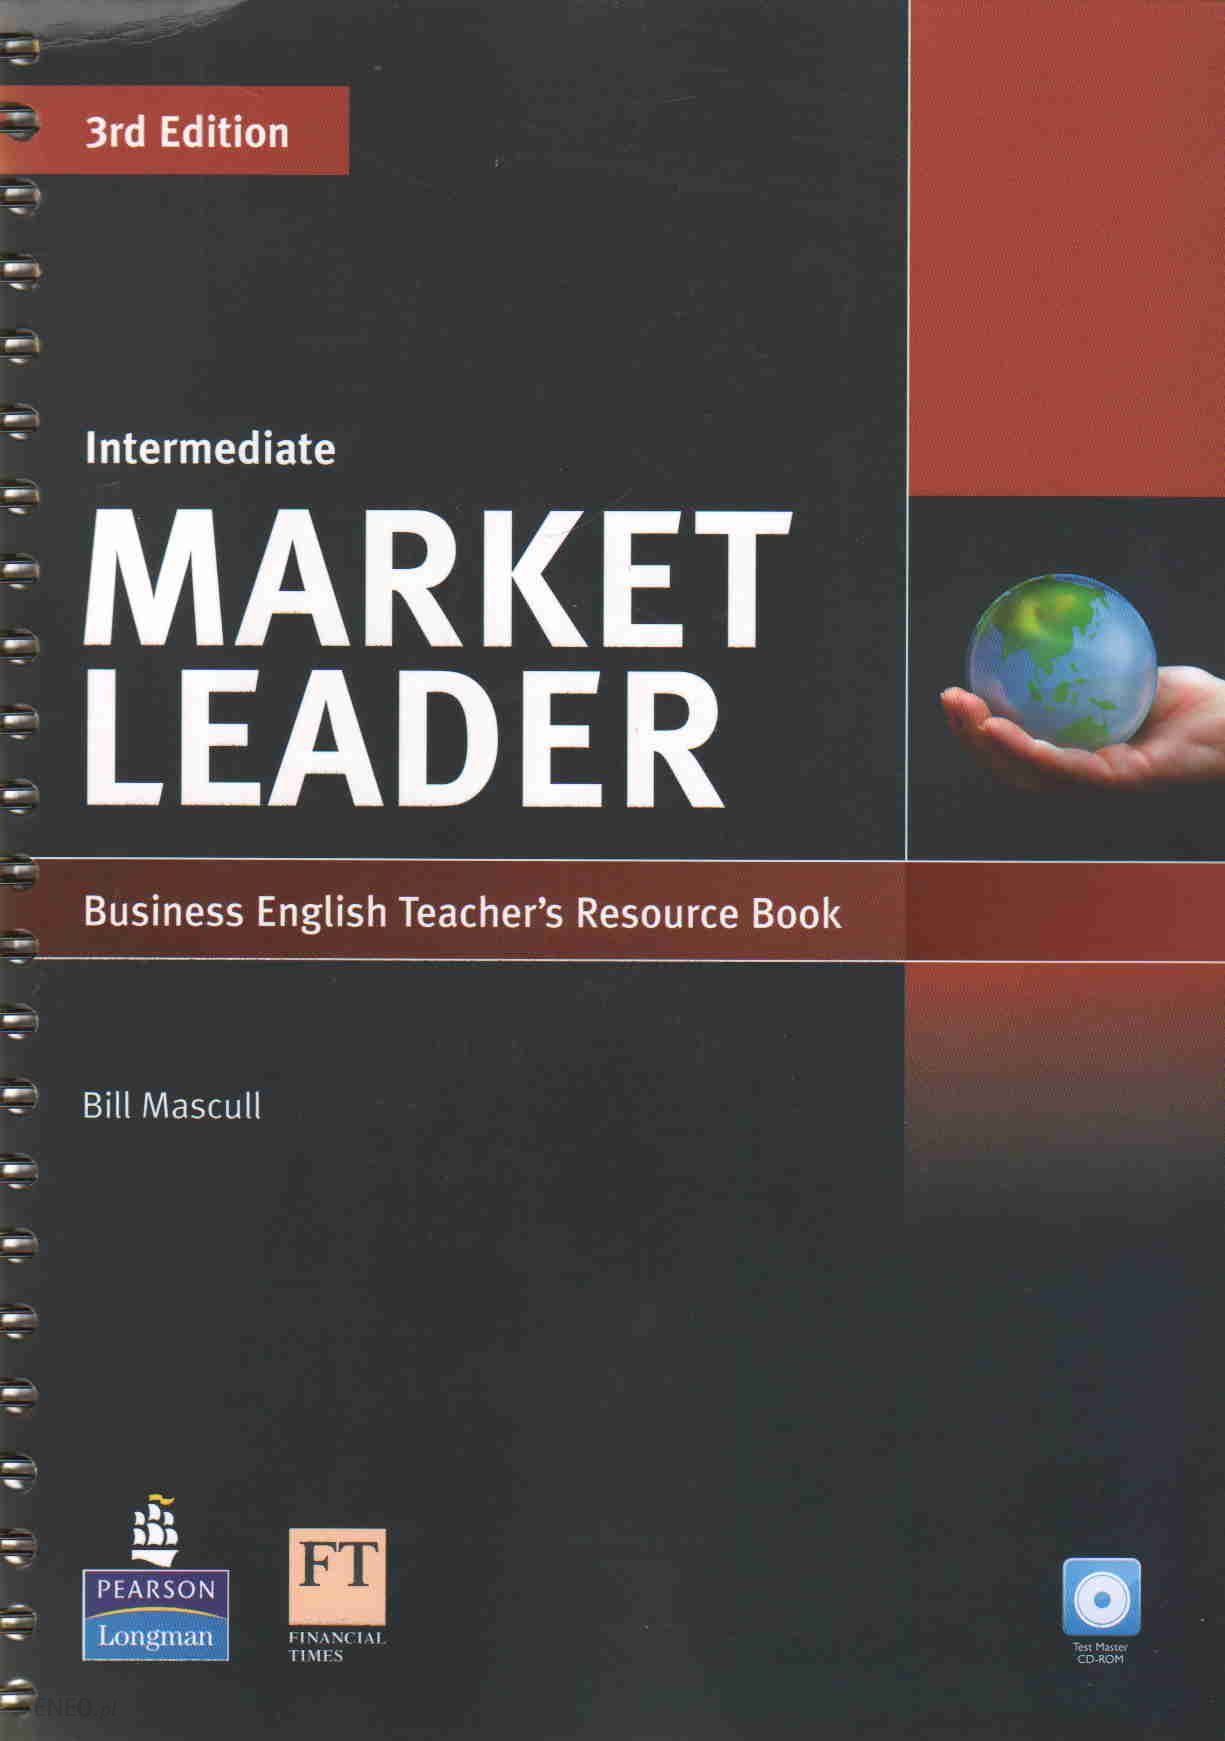 Business　English　Market　i　Ceny　Resource　Int.　Book　Teacher's　Nauka　Leader　angielskiego　opinie